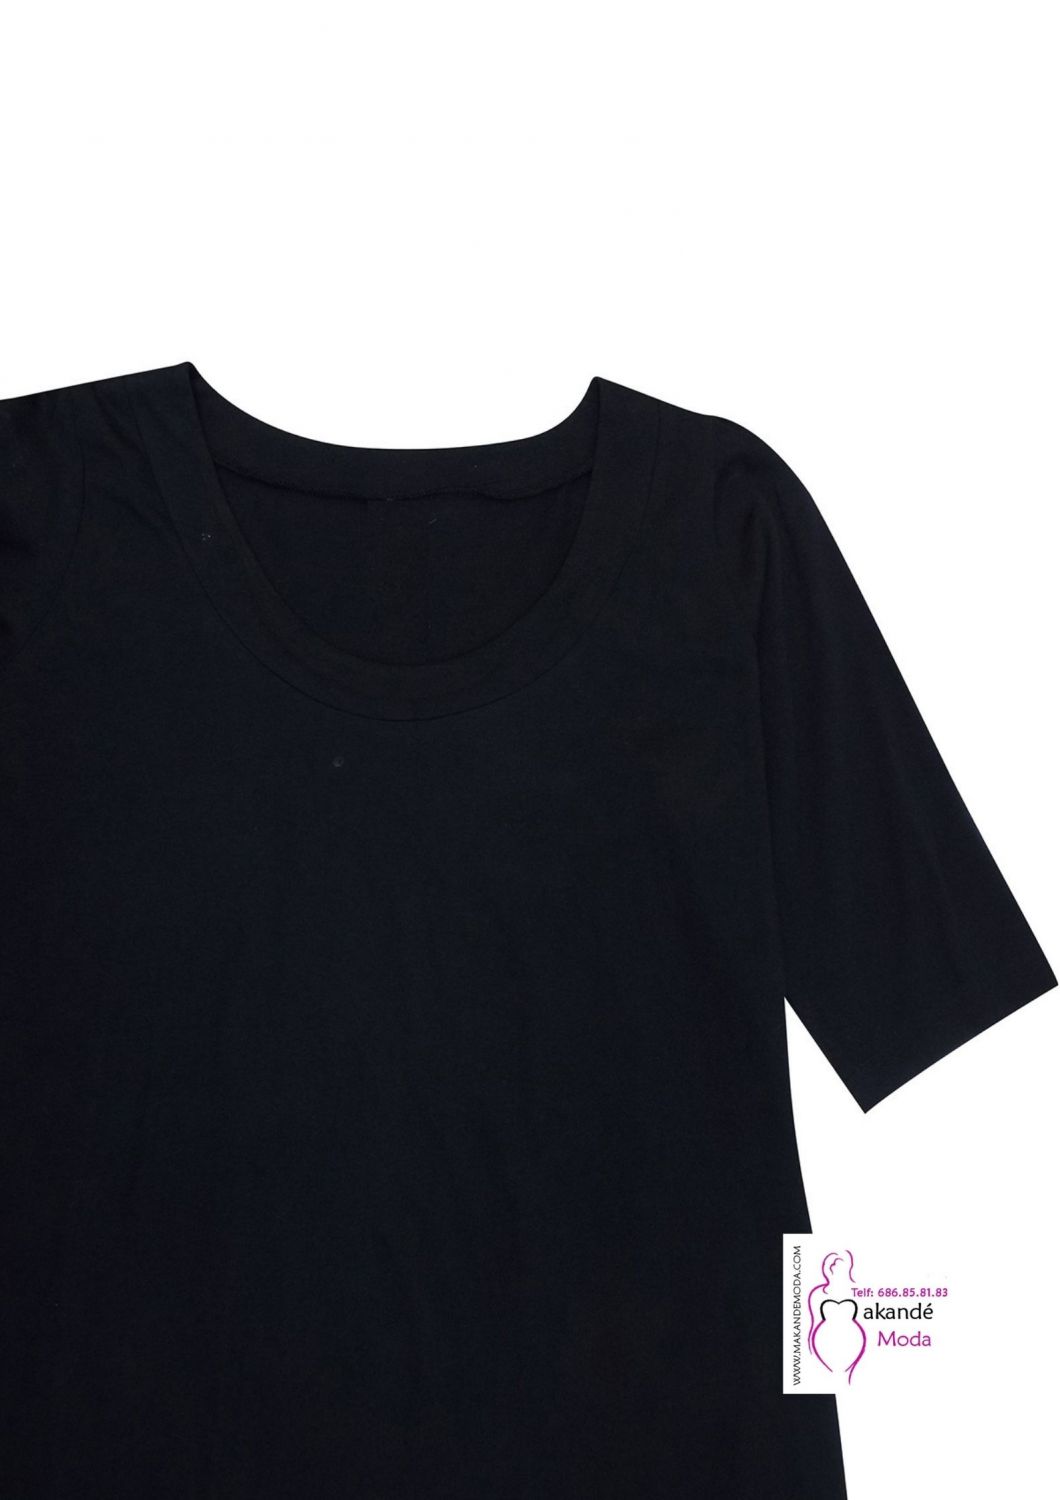 M - 3031n Camiseta lisa algodón Negra